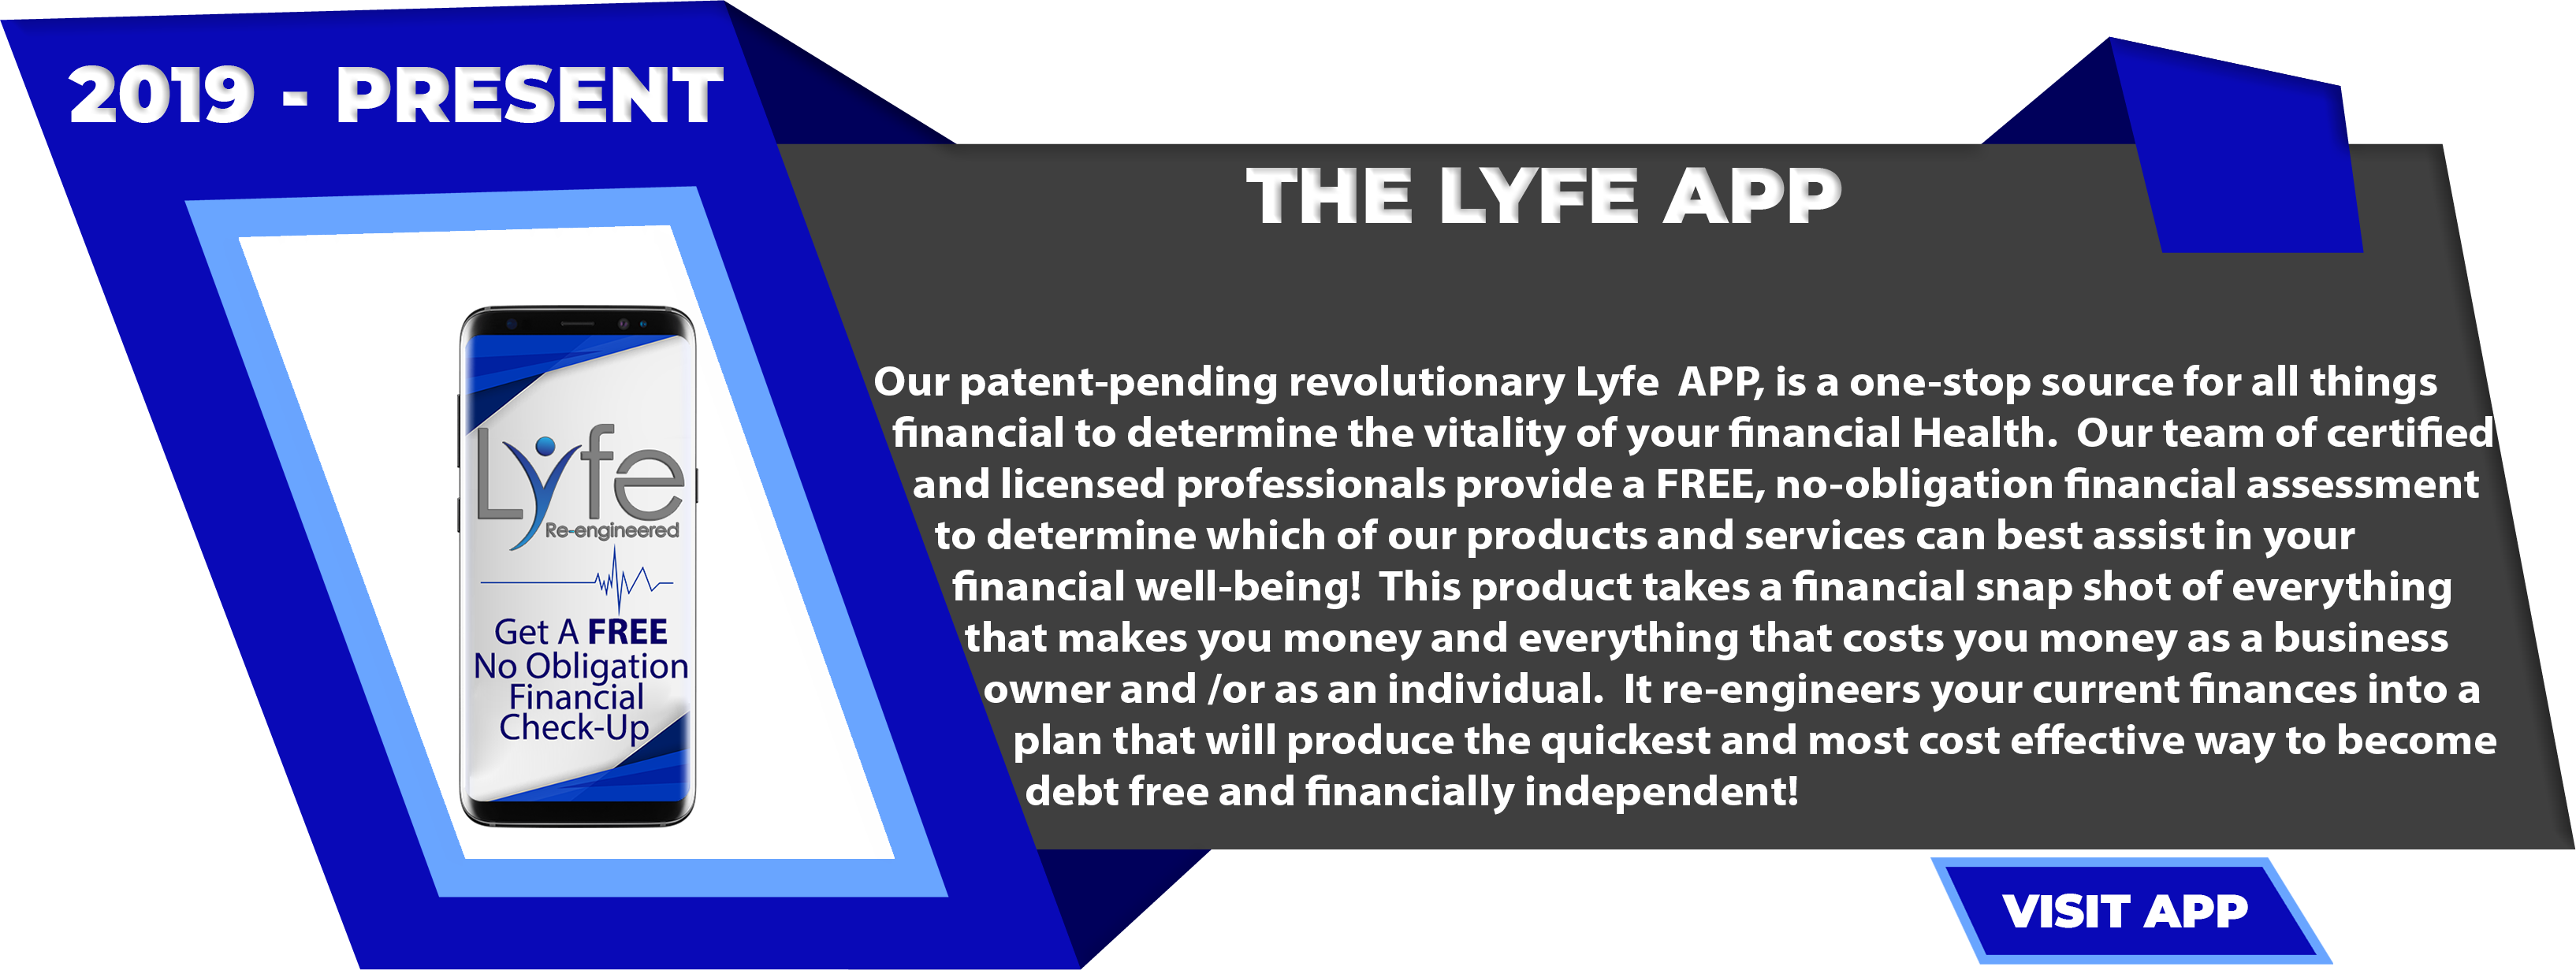 The Lyfe App 2019